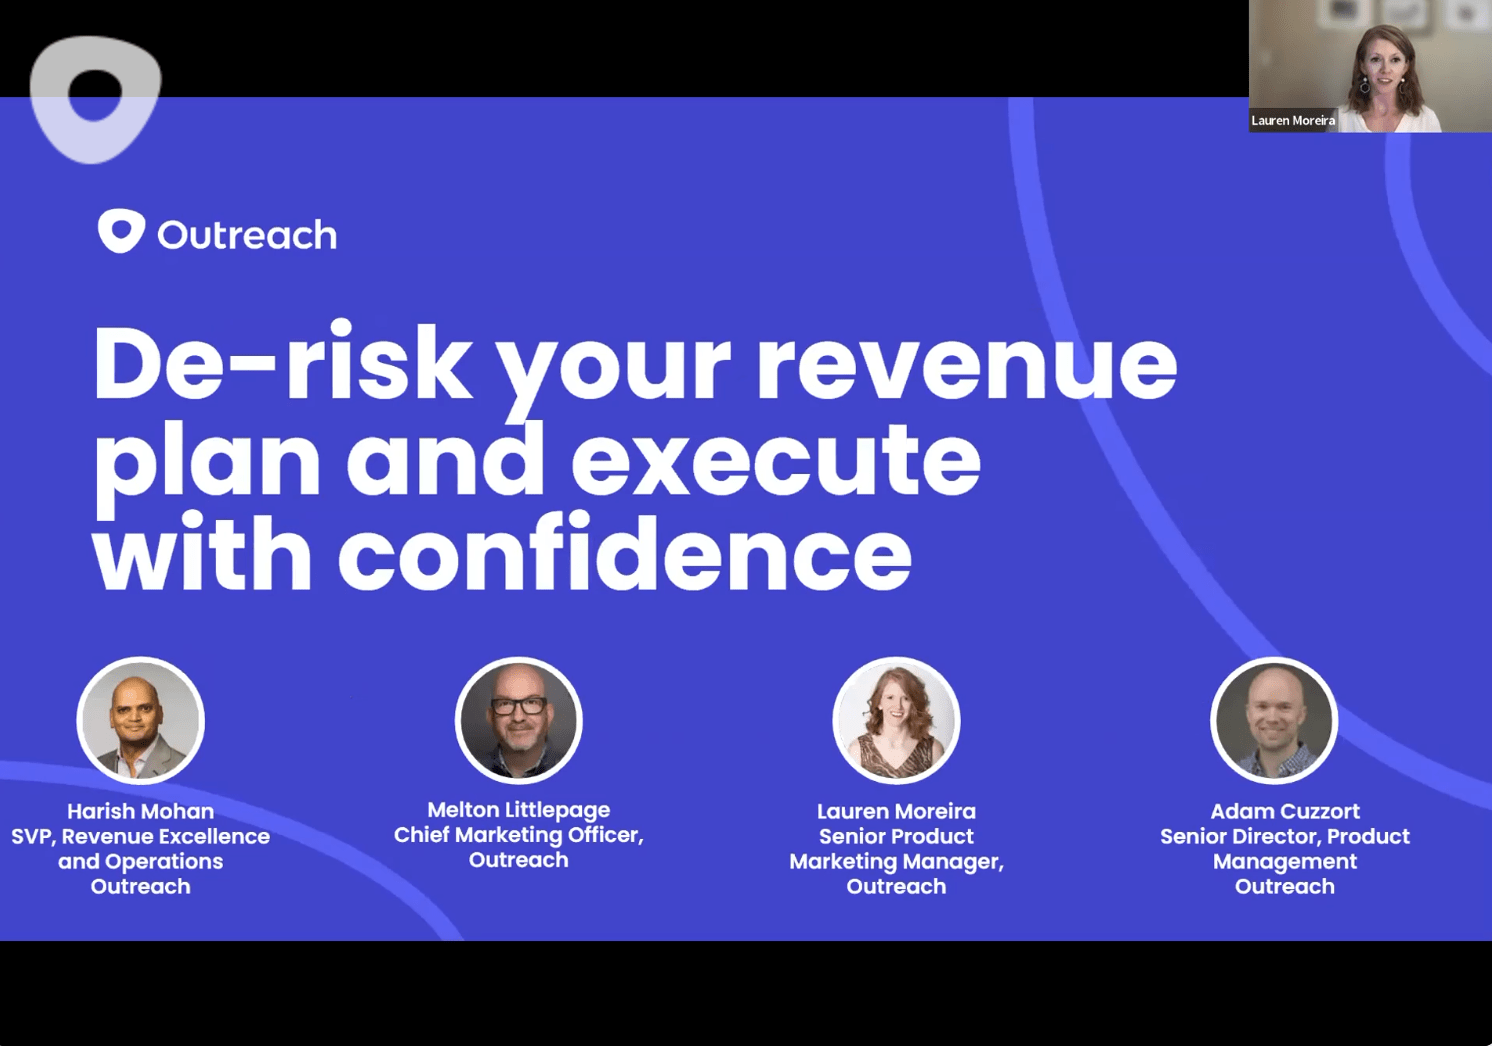 de risk 1 - De-risk your revenue plan and execute with confidence